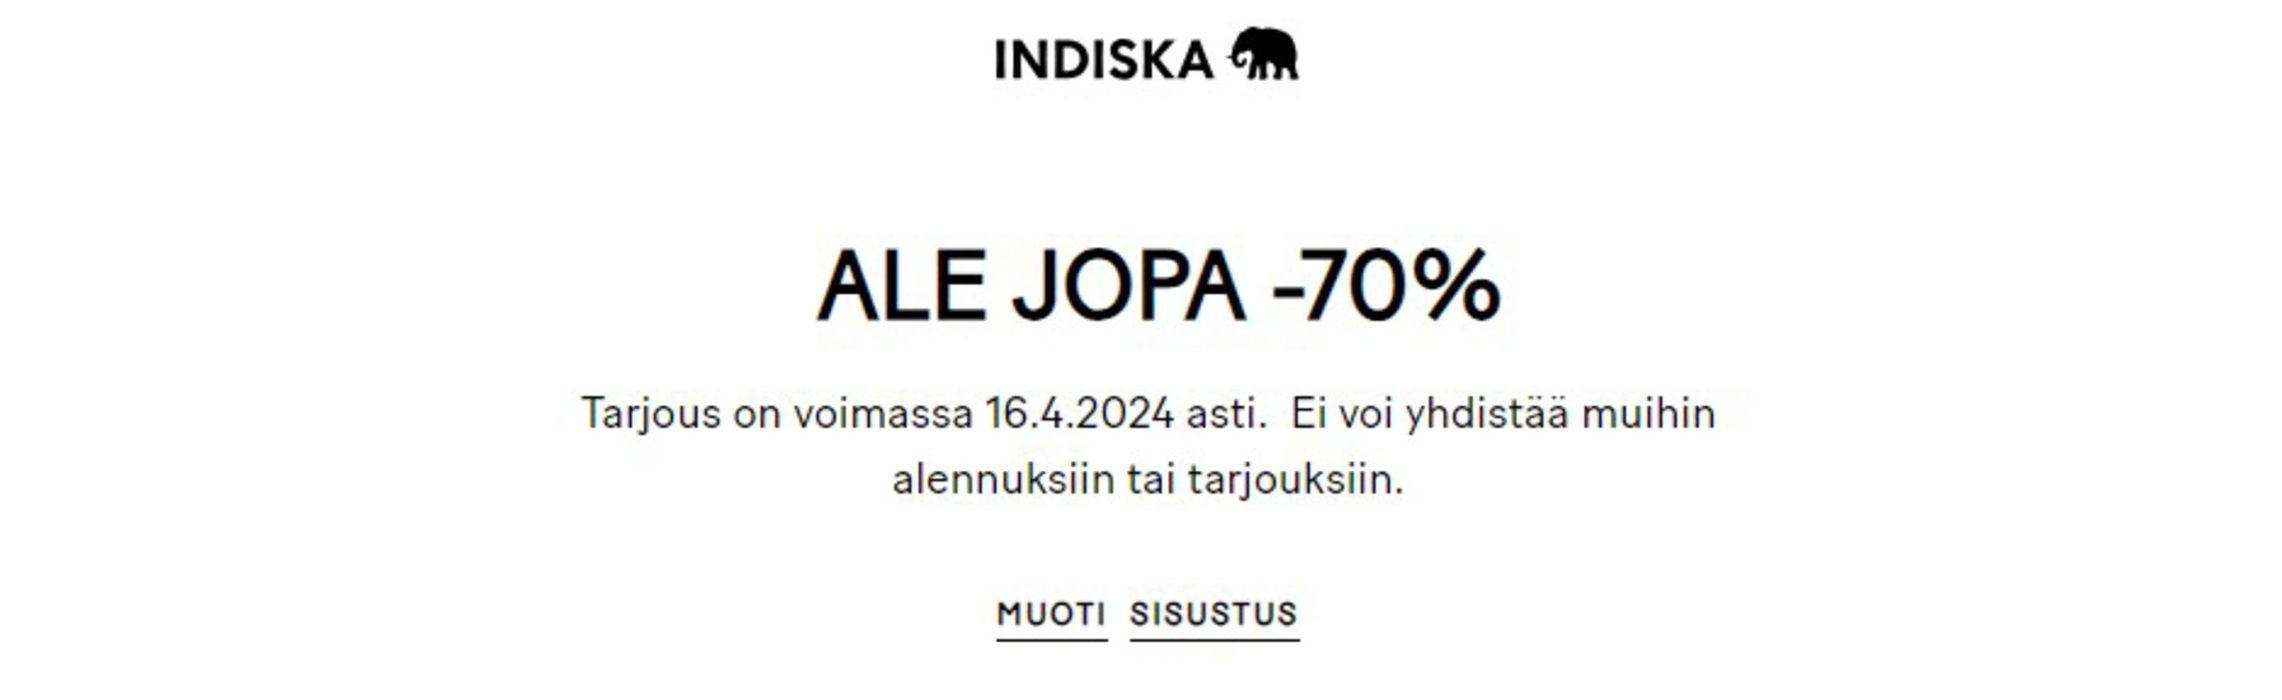 Indiska -luettelo, Tampere | Ale jopa -70% | 3.4.2024 - 16.4.2024